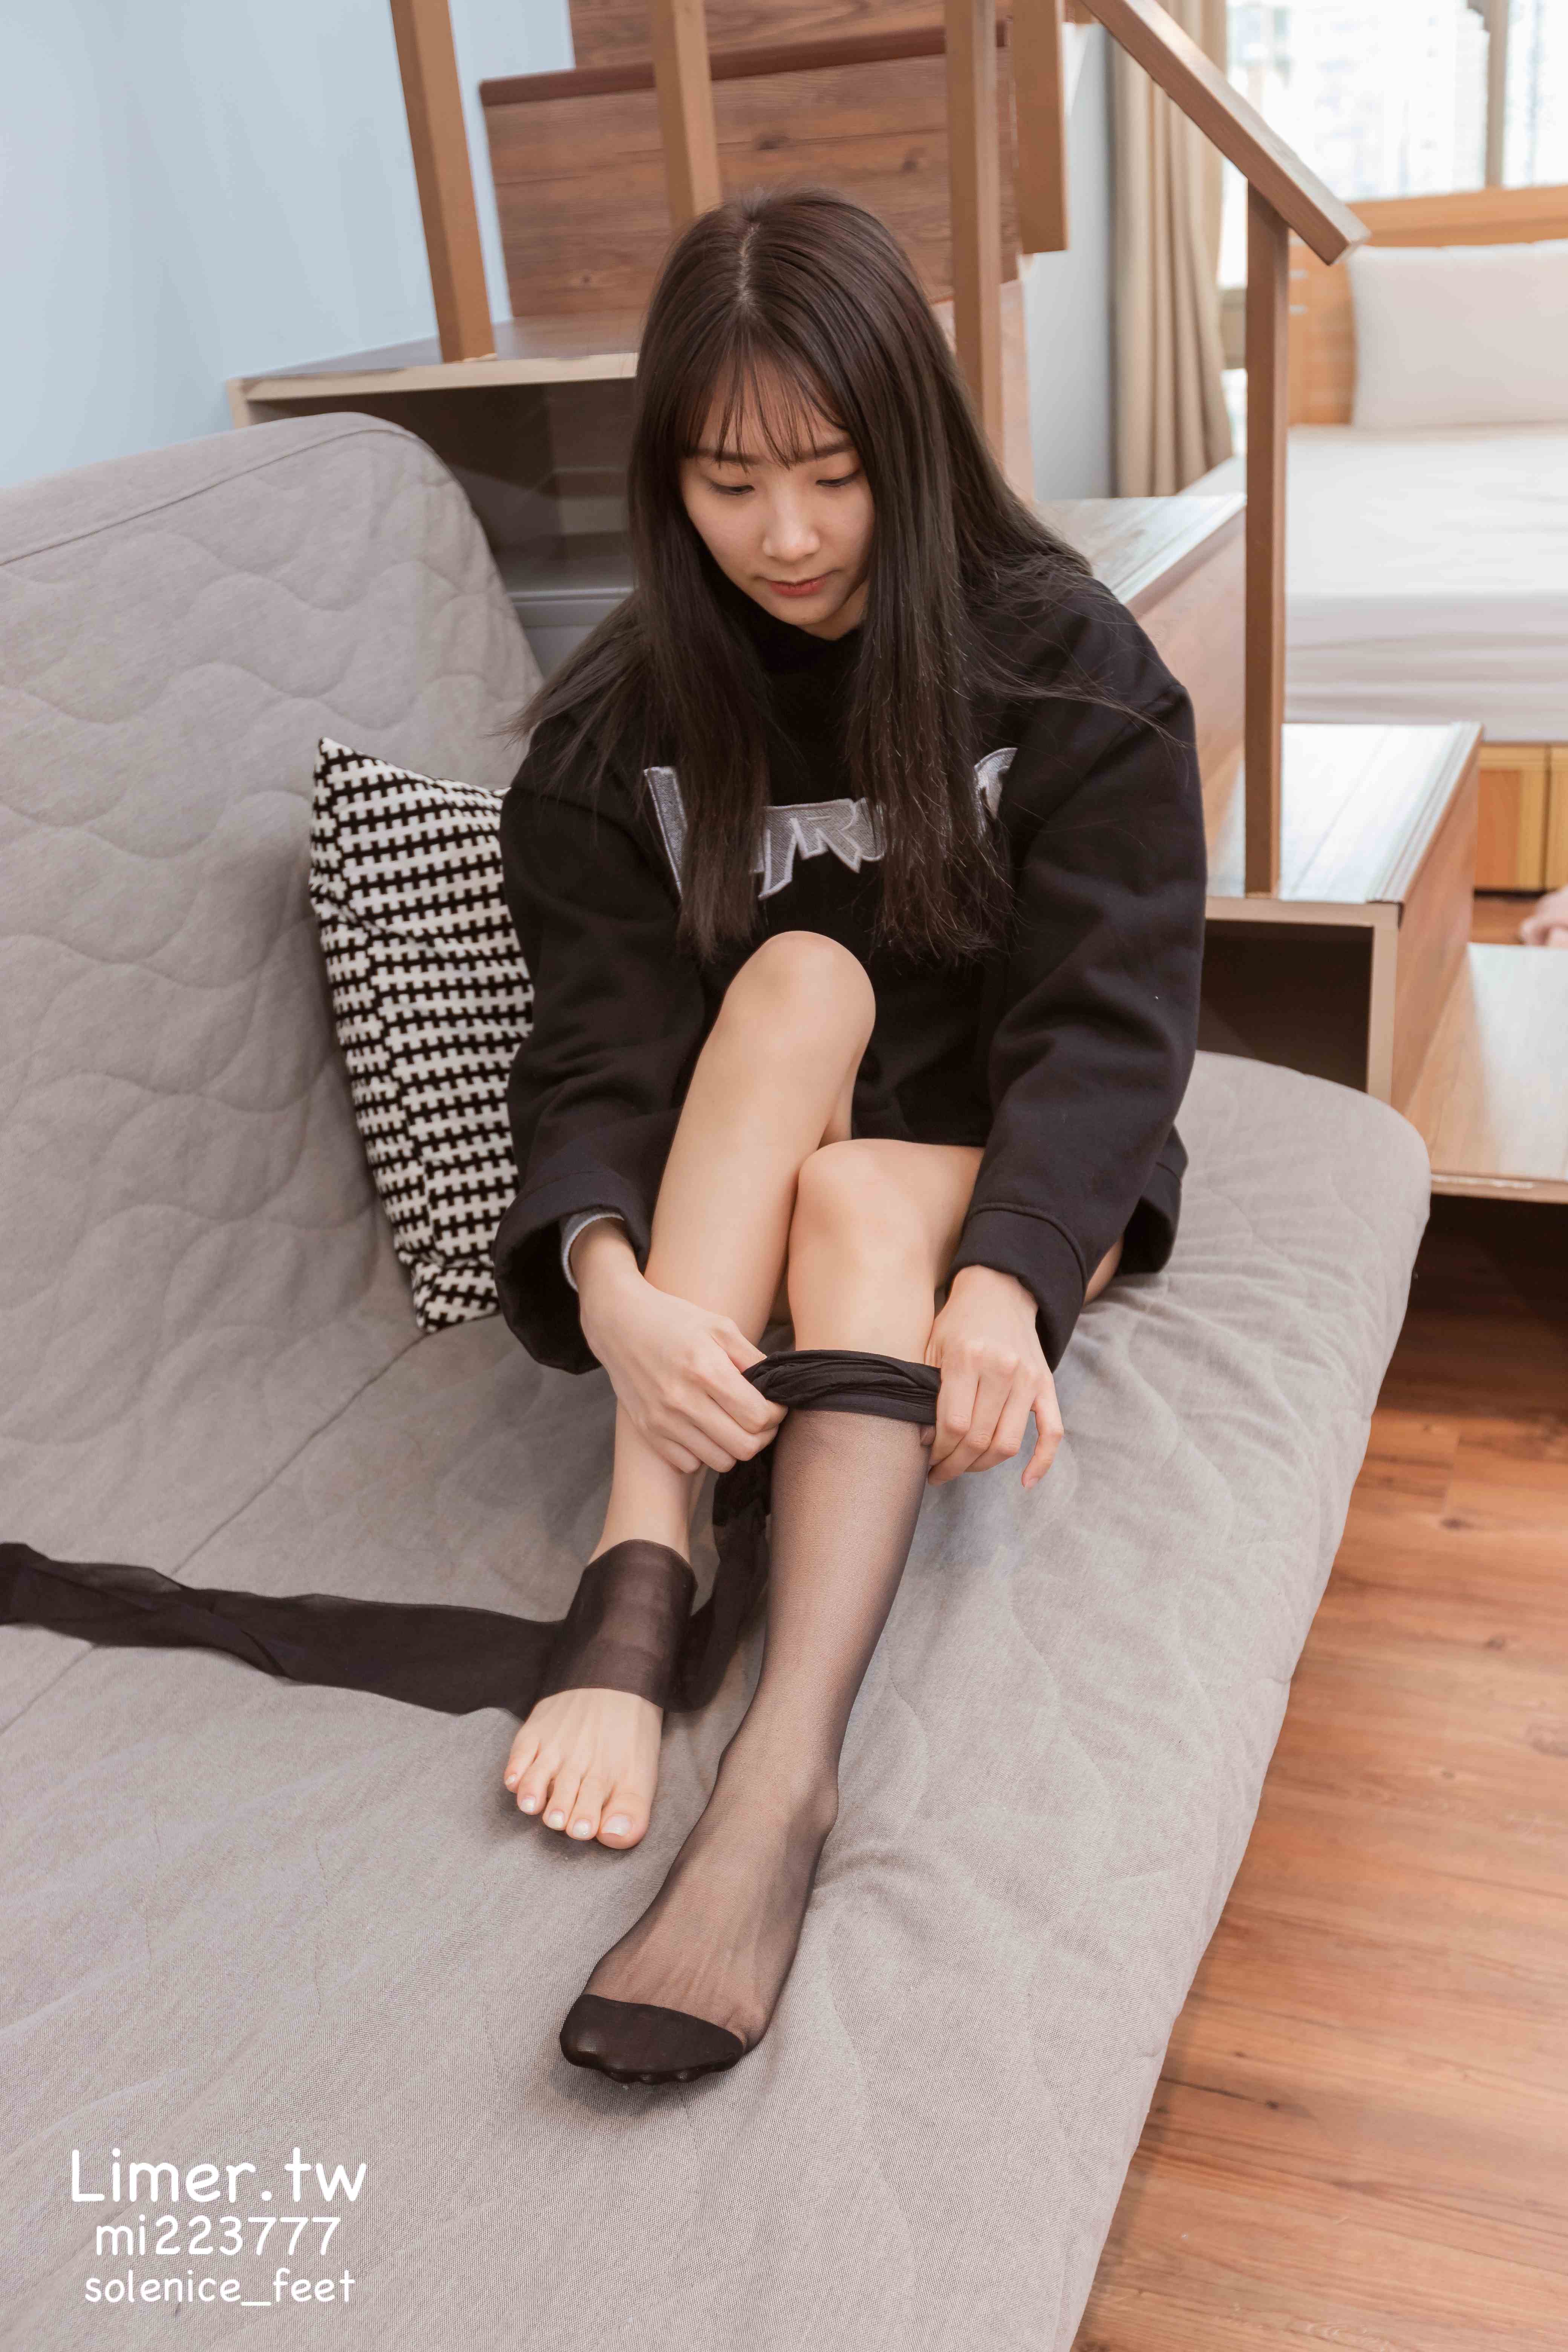 China Beauty Legs and feet 549